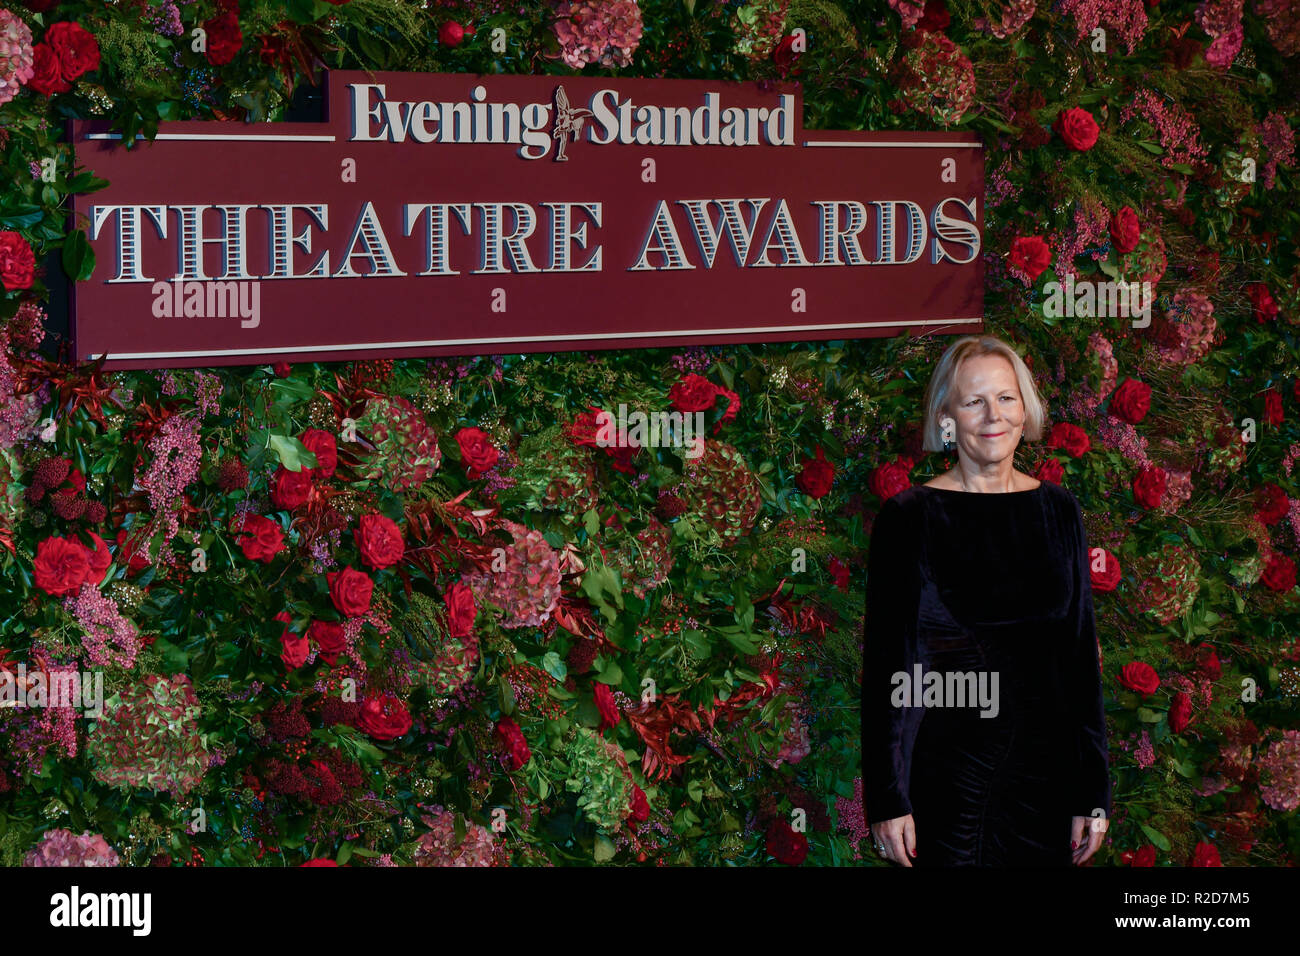 London, Großbritannien. 18 Nov, 2018. Phyllida Lloyd besucht die 64th Evening Standard Theater Award Theatre Royal, am 18. November 2018, London, UK. Bild Capital/Alamy leben Nachrichten Stockfoto